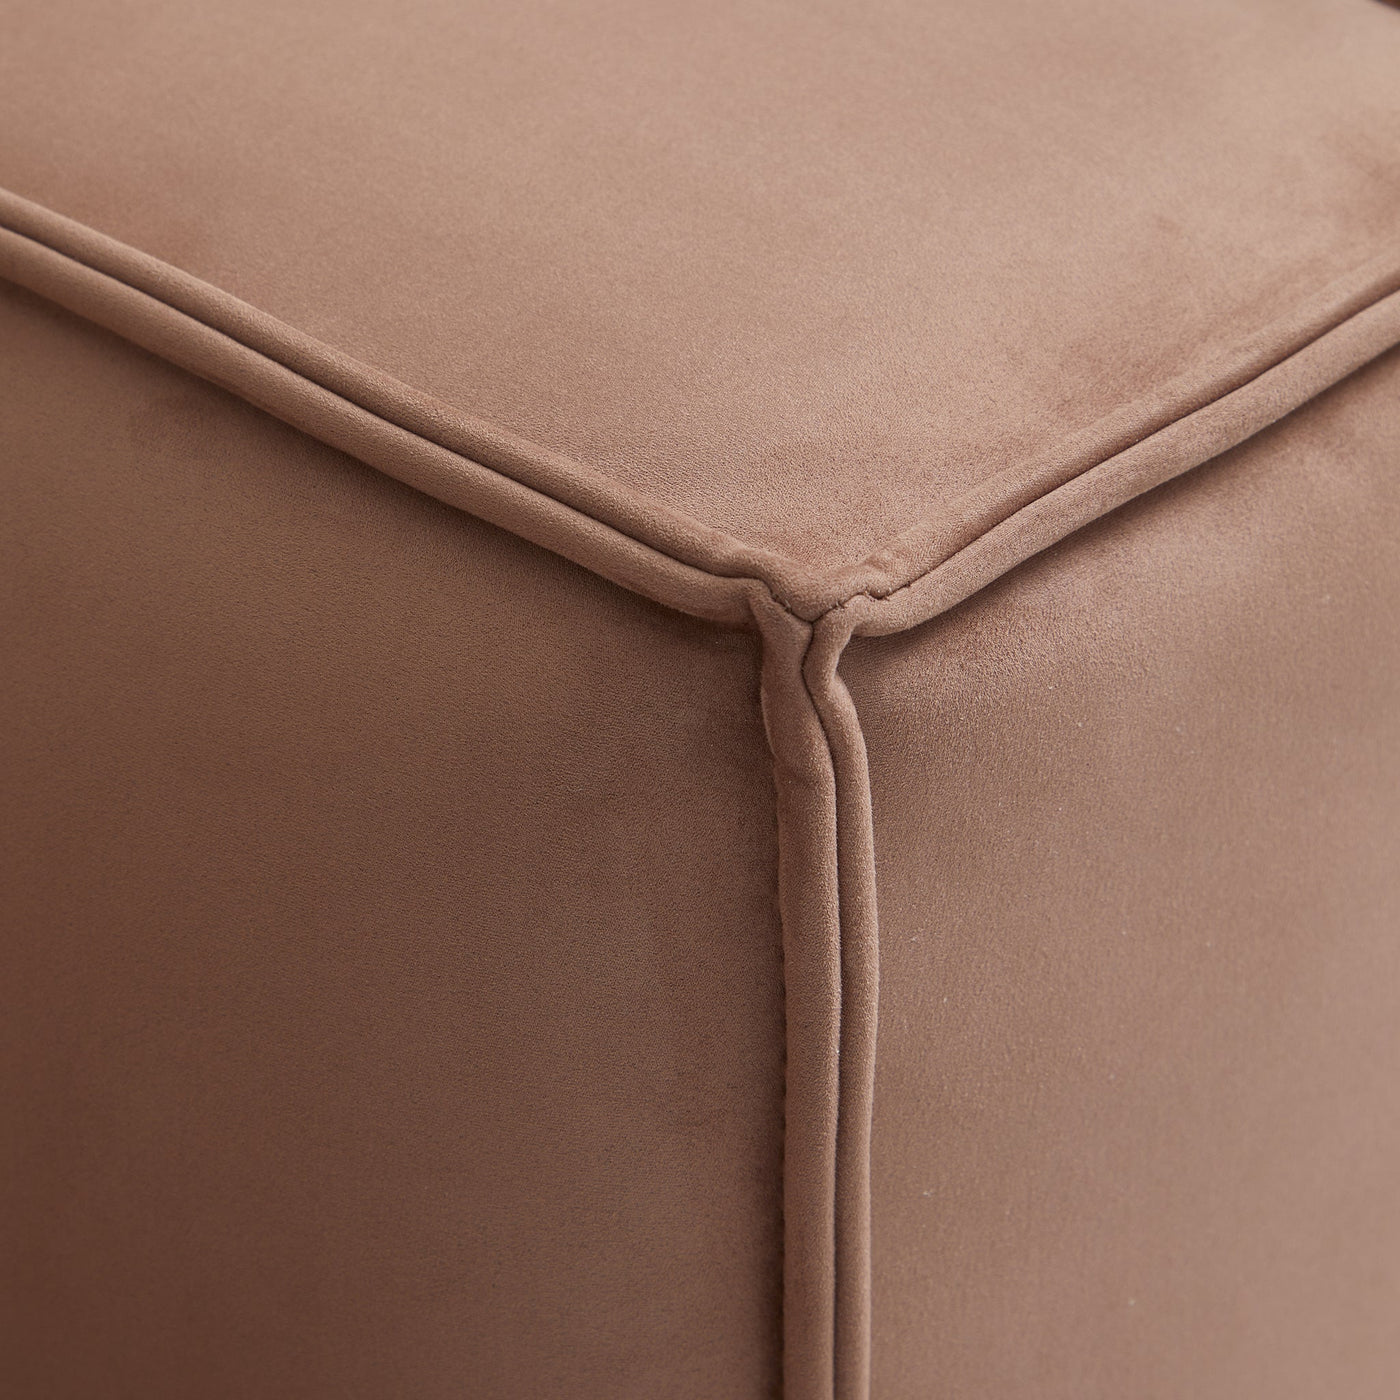 Luxury Minimalist Brown Fabric Armchair-Brown